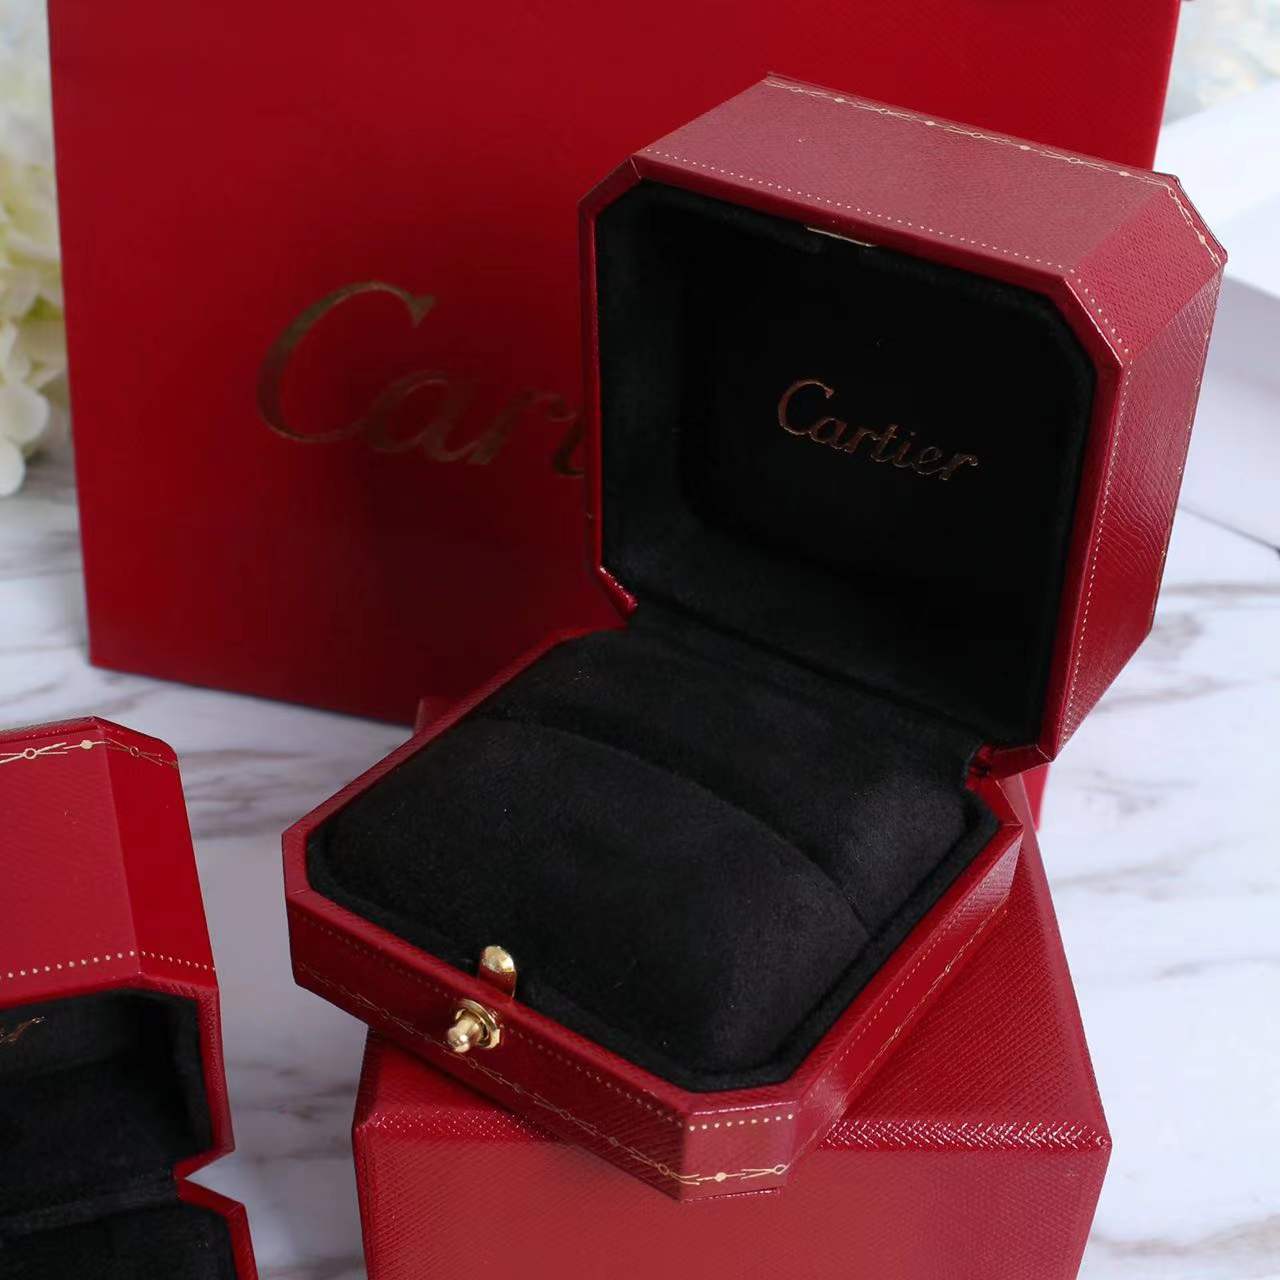 1:1 Cartier Ring box 1 set